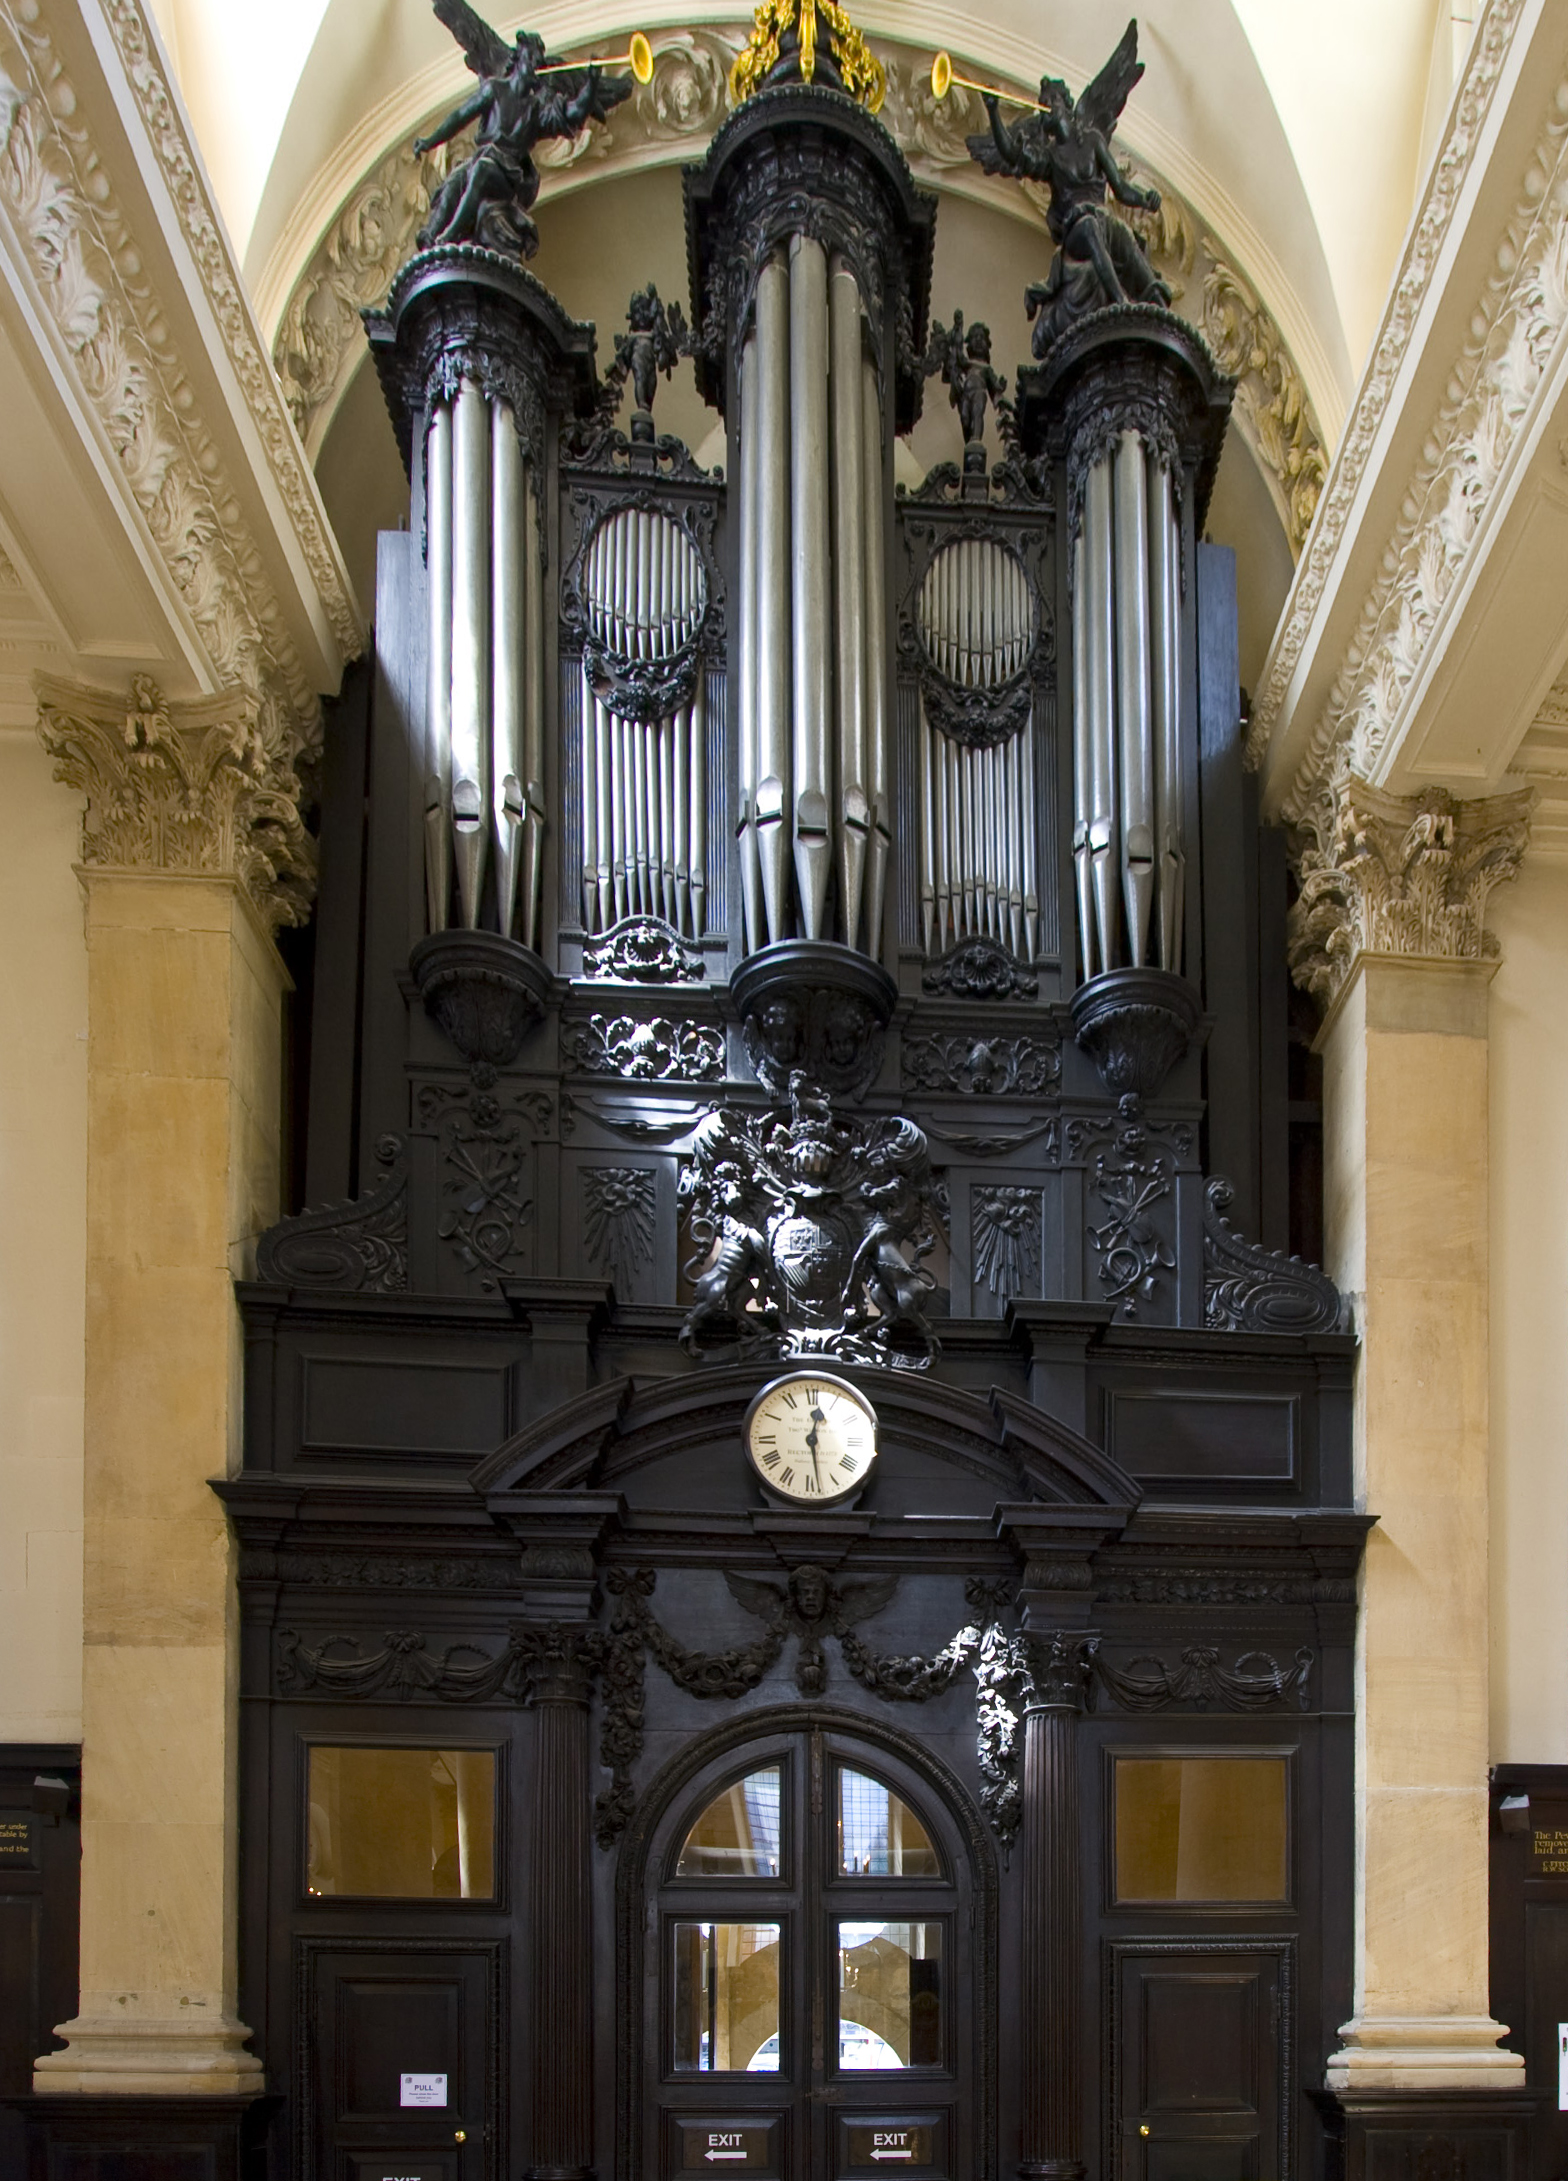 The organ at St Stephen